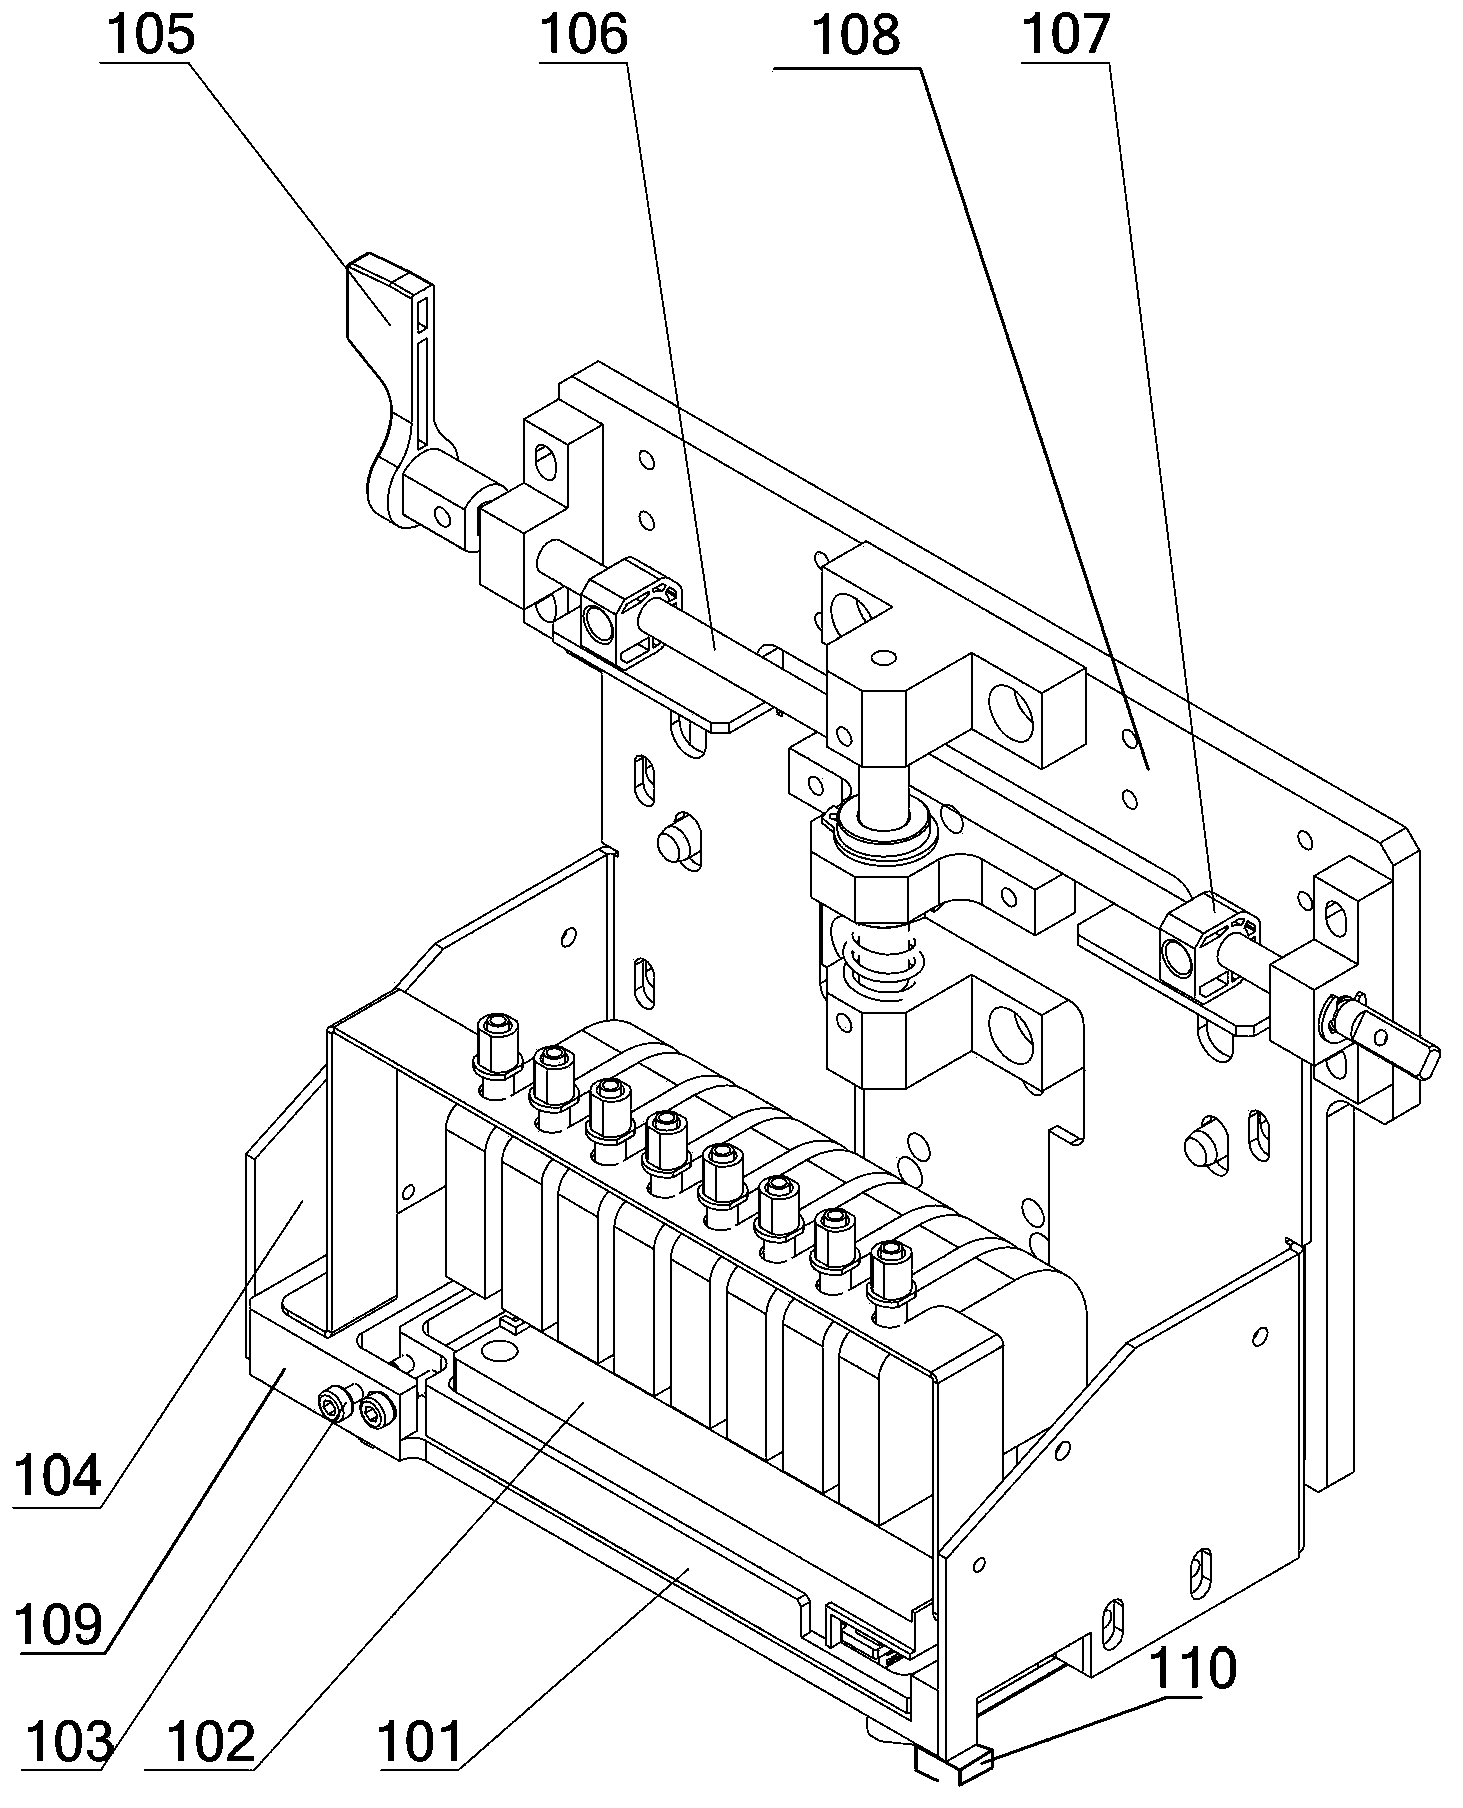 A nozzle adjustment device and a nozzle adjustment method